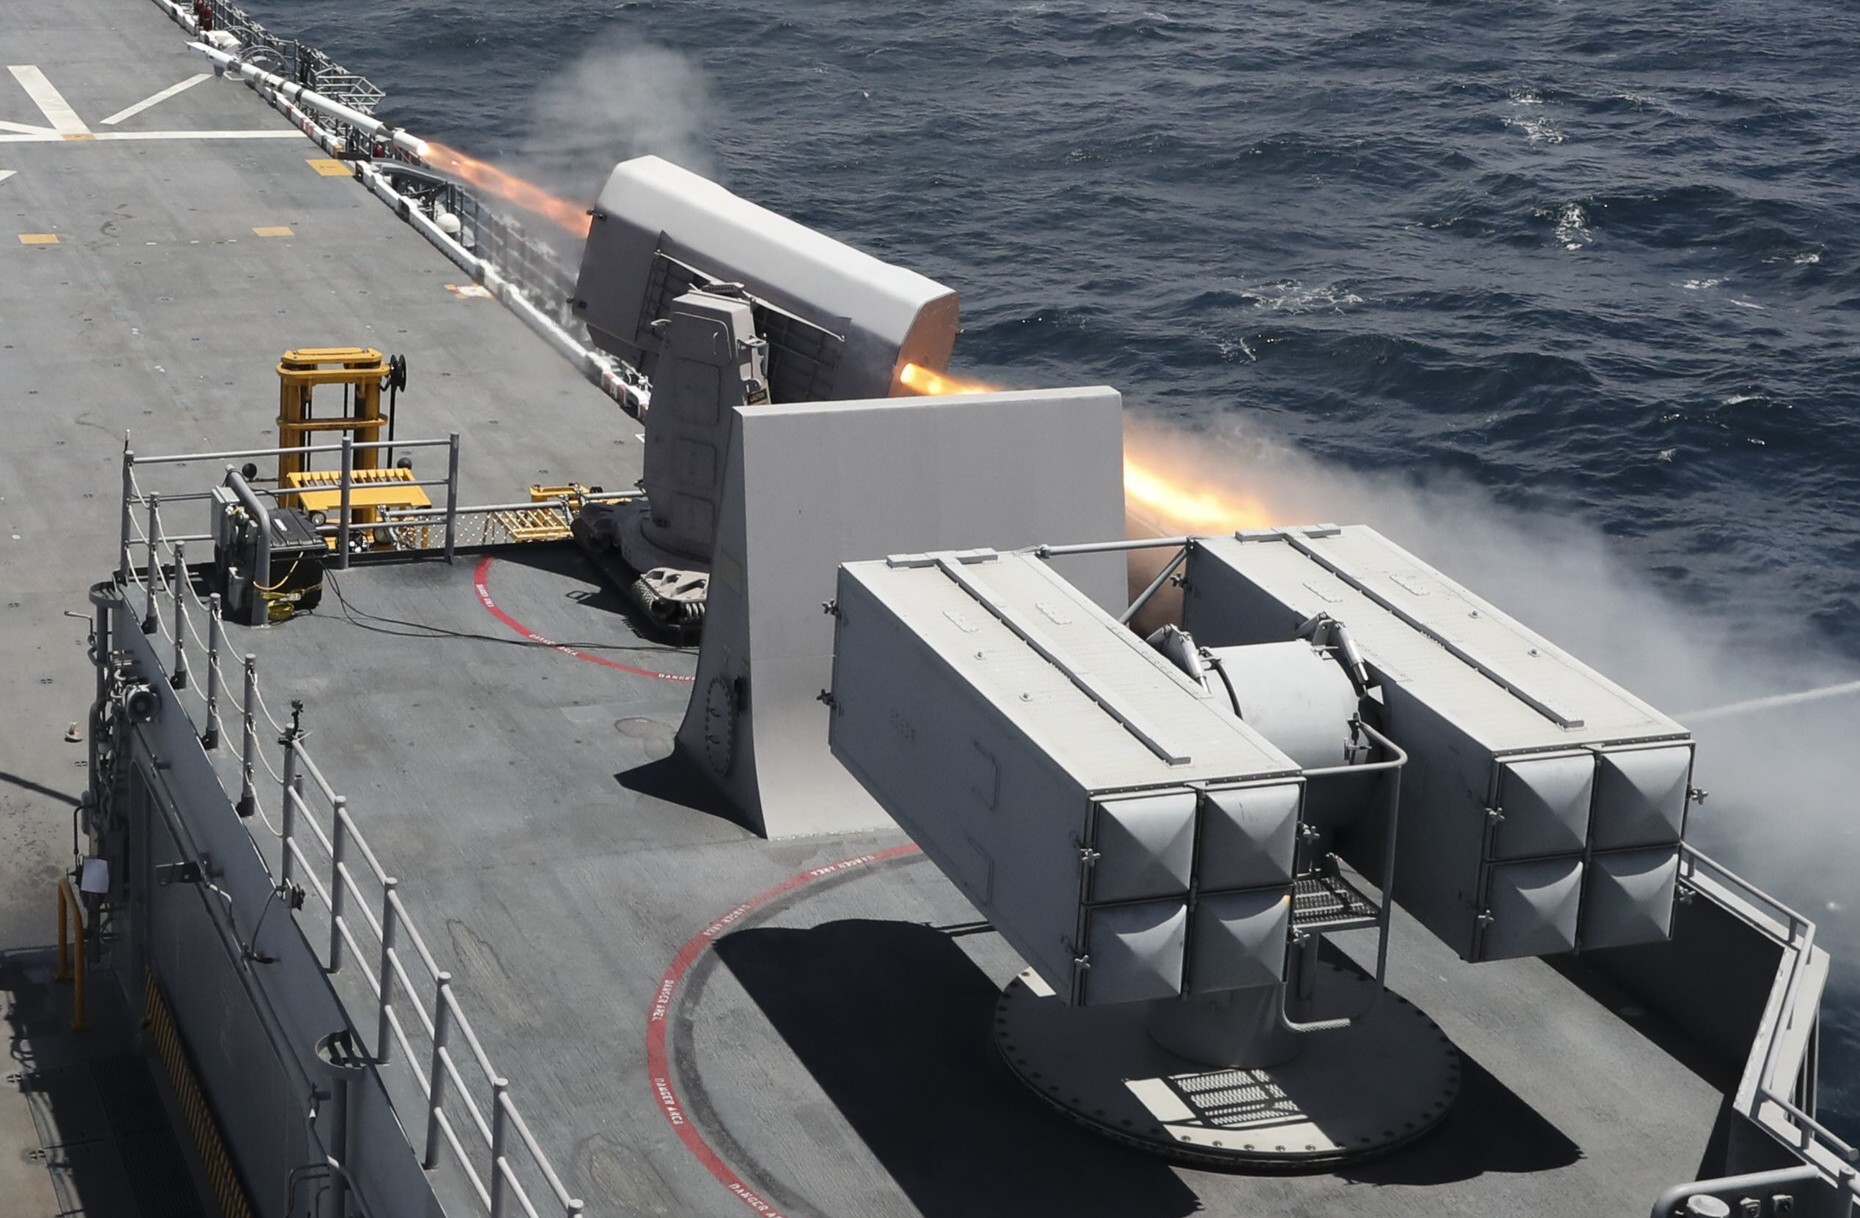 lha-7 uss tripoli america class amphibious assault ship landing us navy rim-116 rolling airframe missile ram 23